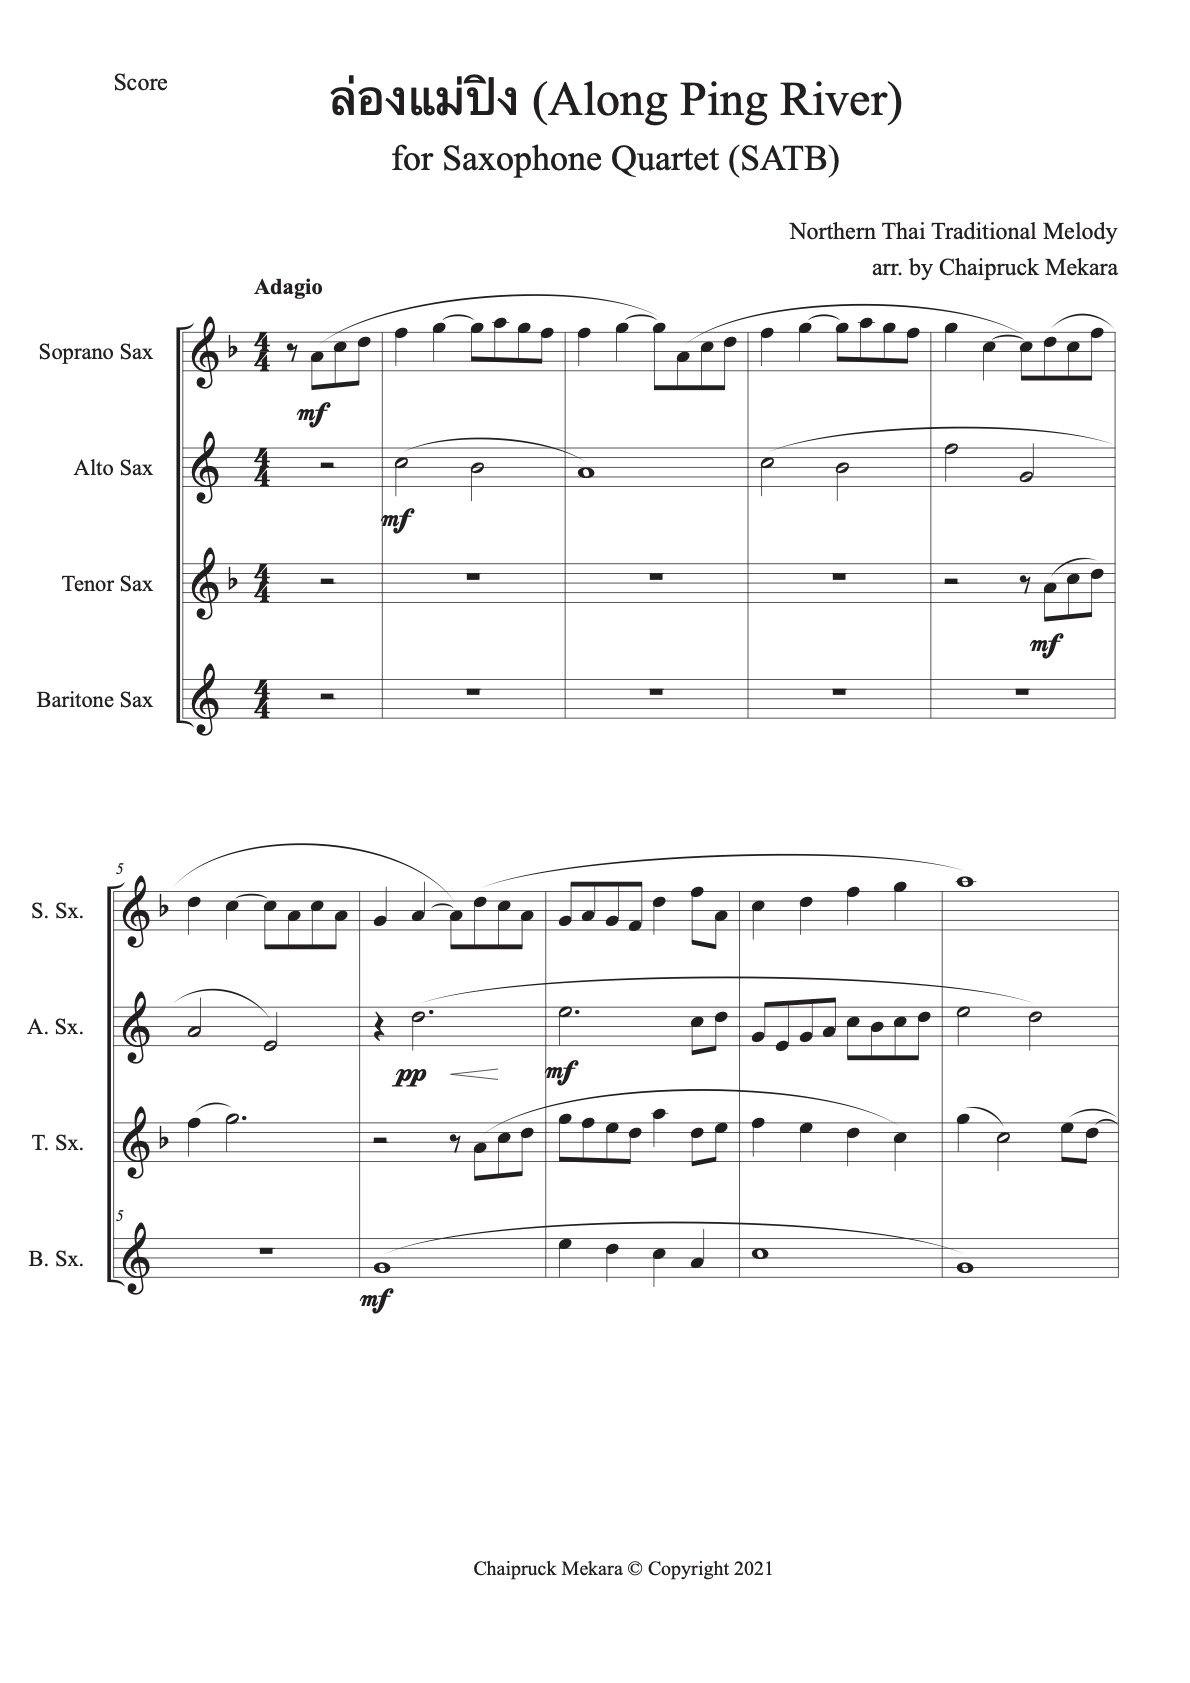 sax quartet sheet music (SATB) - Along Ping River (ล่องแม่ปิง) - ChaipruckMekara